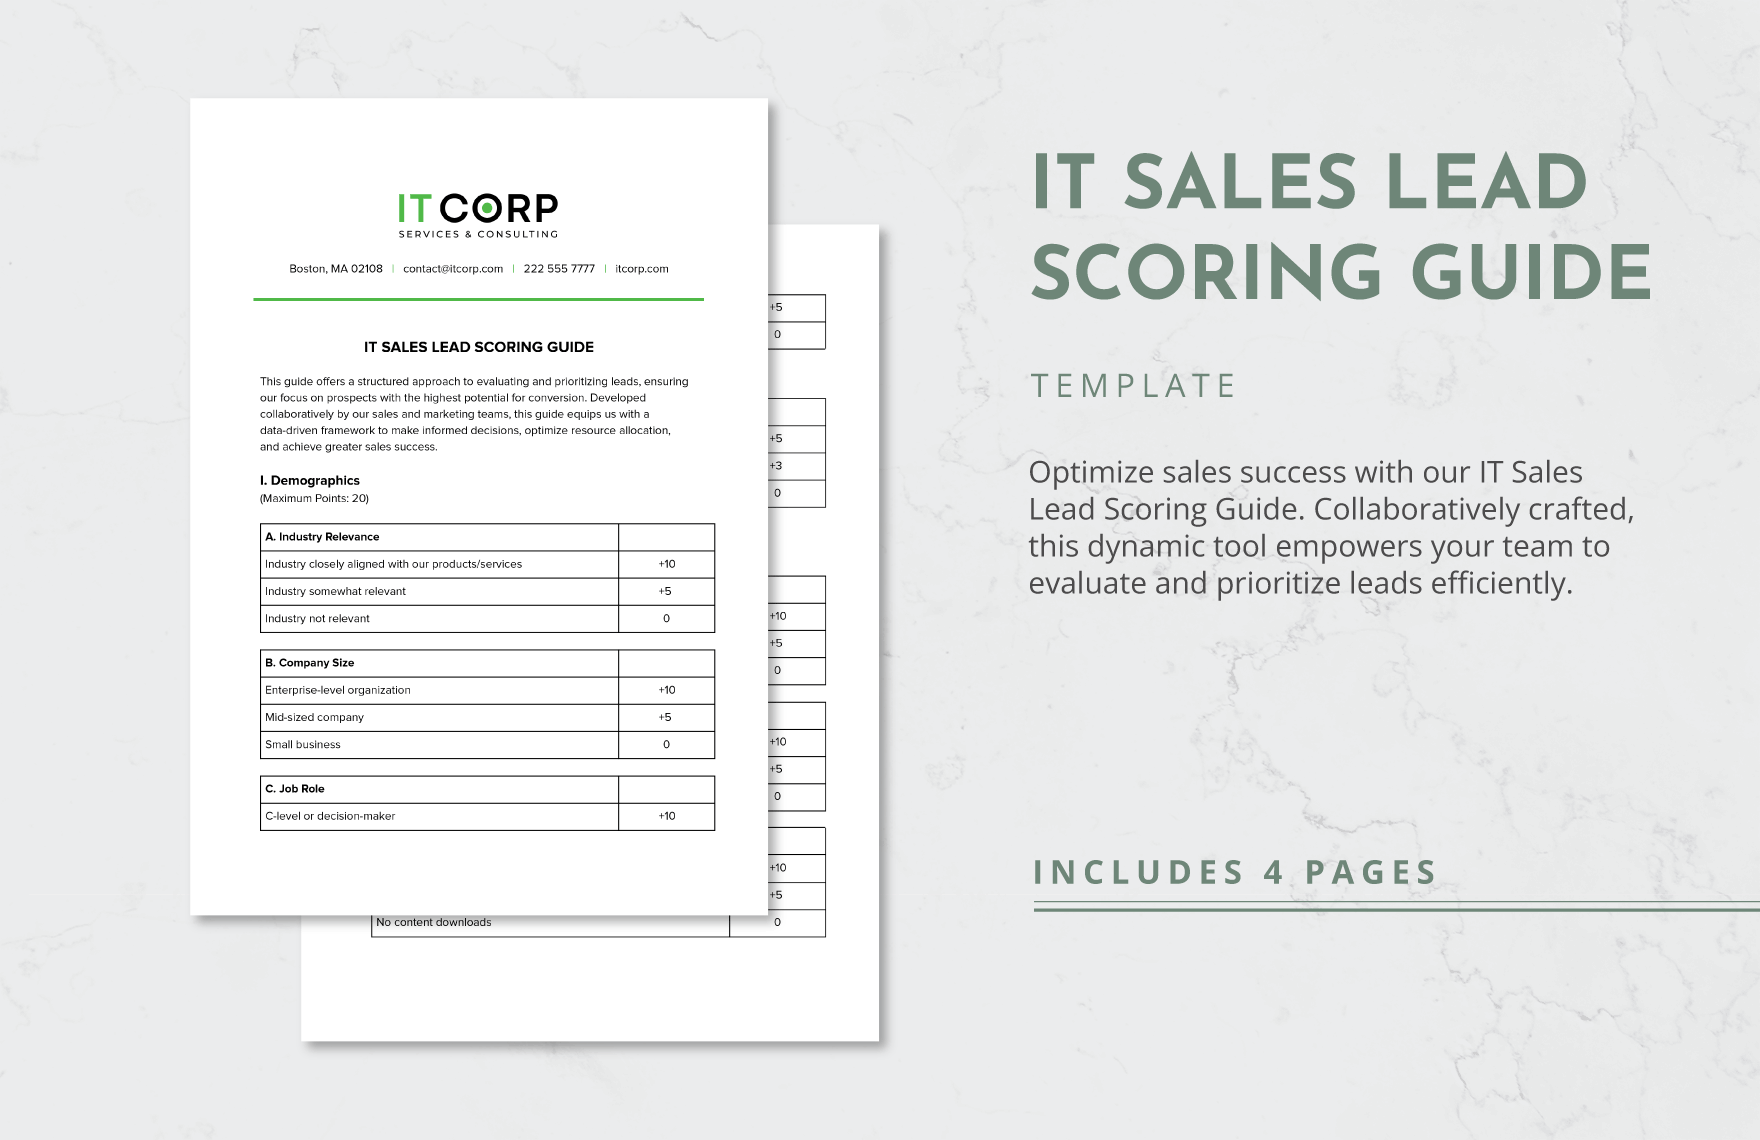 IT Sales Lead Scoring Guide Template